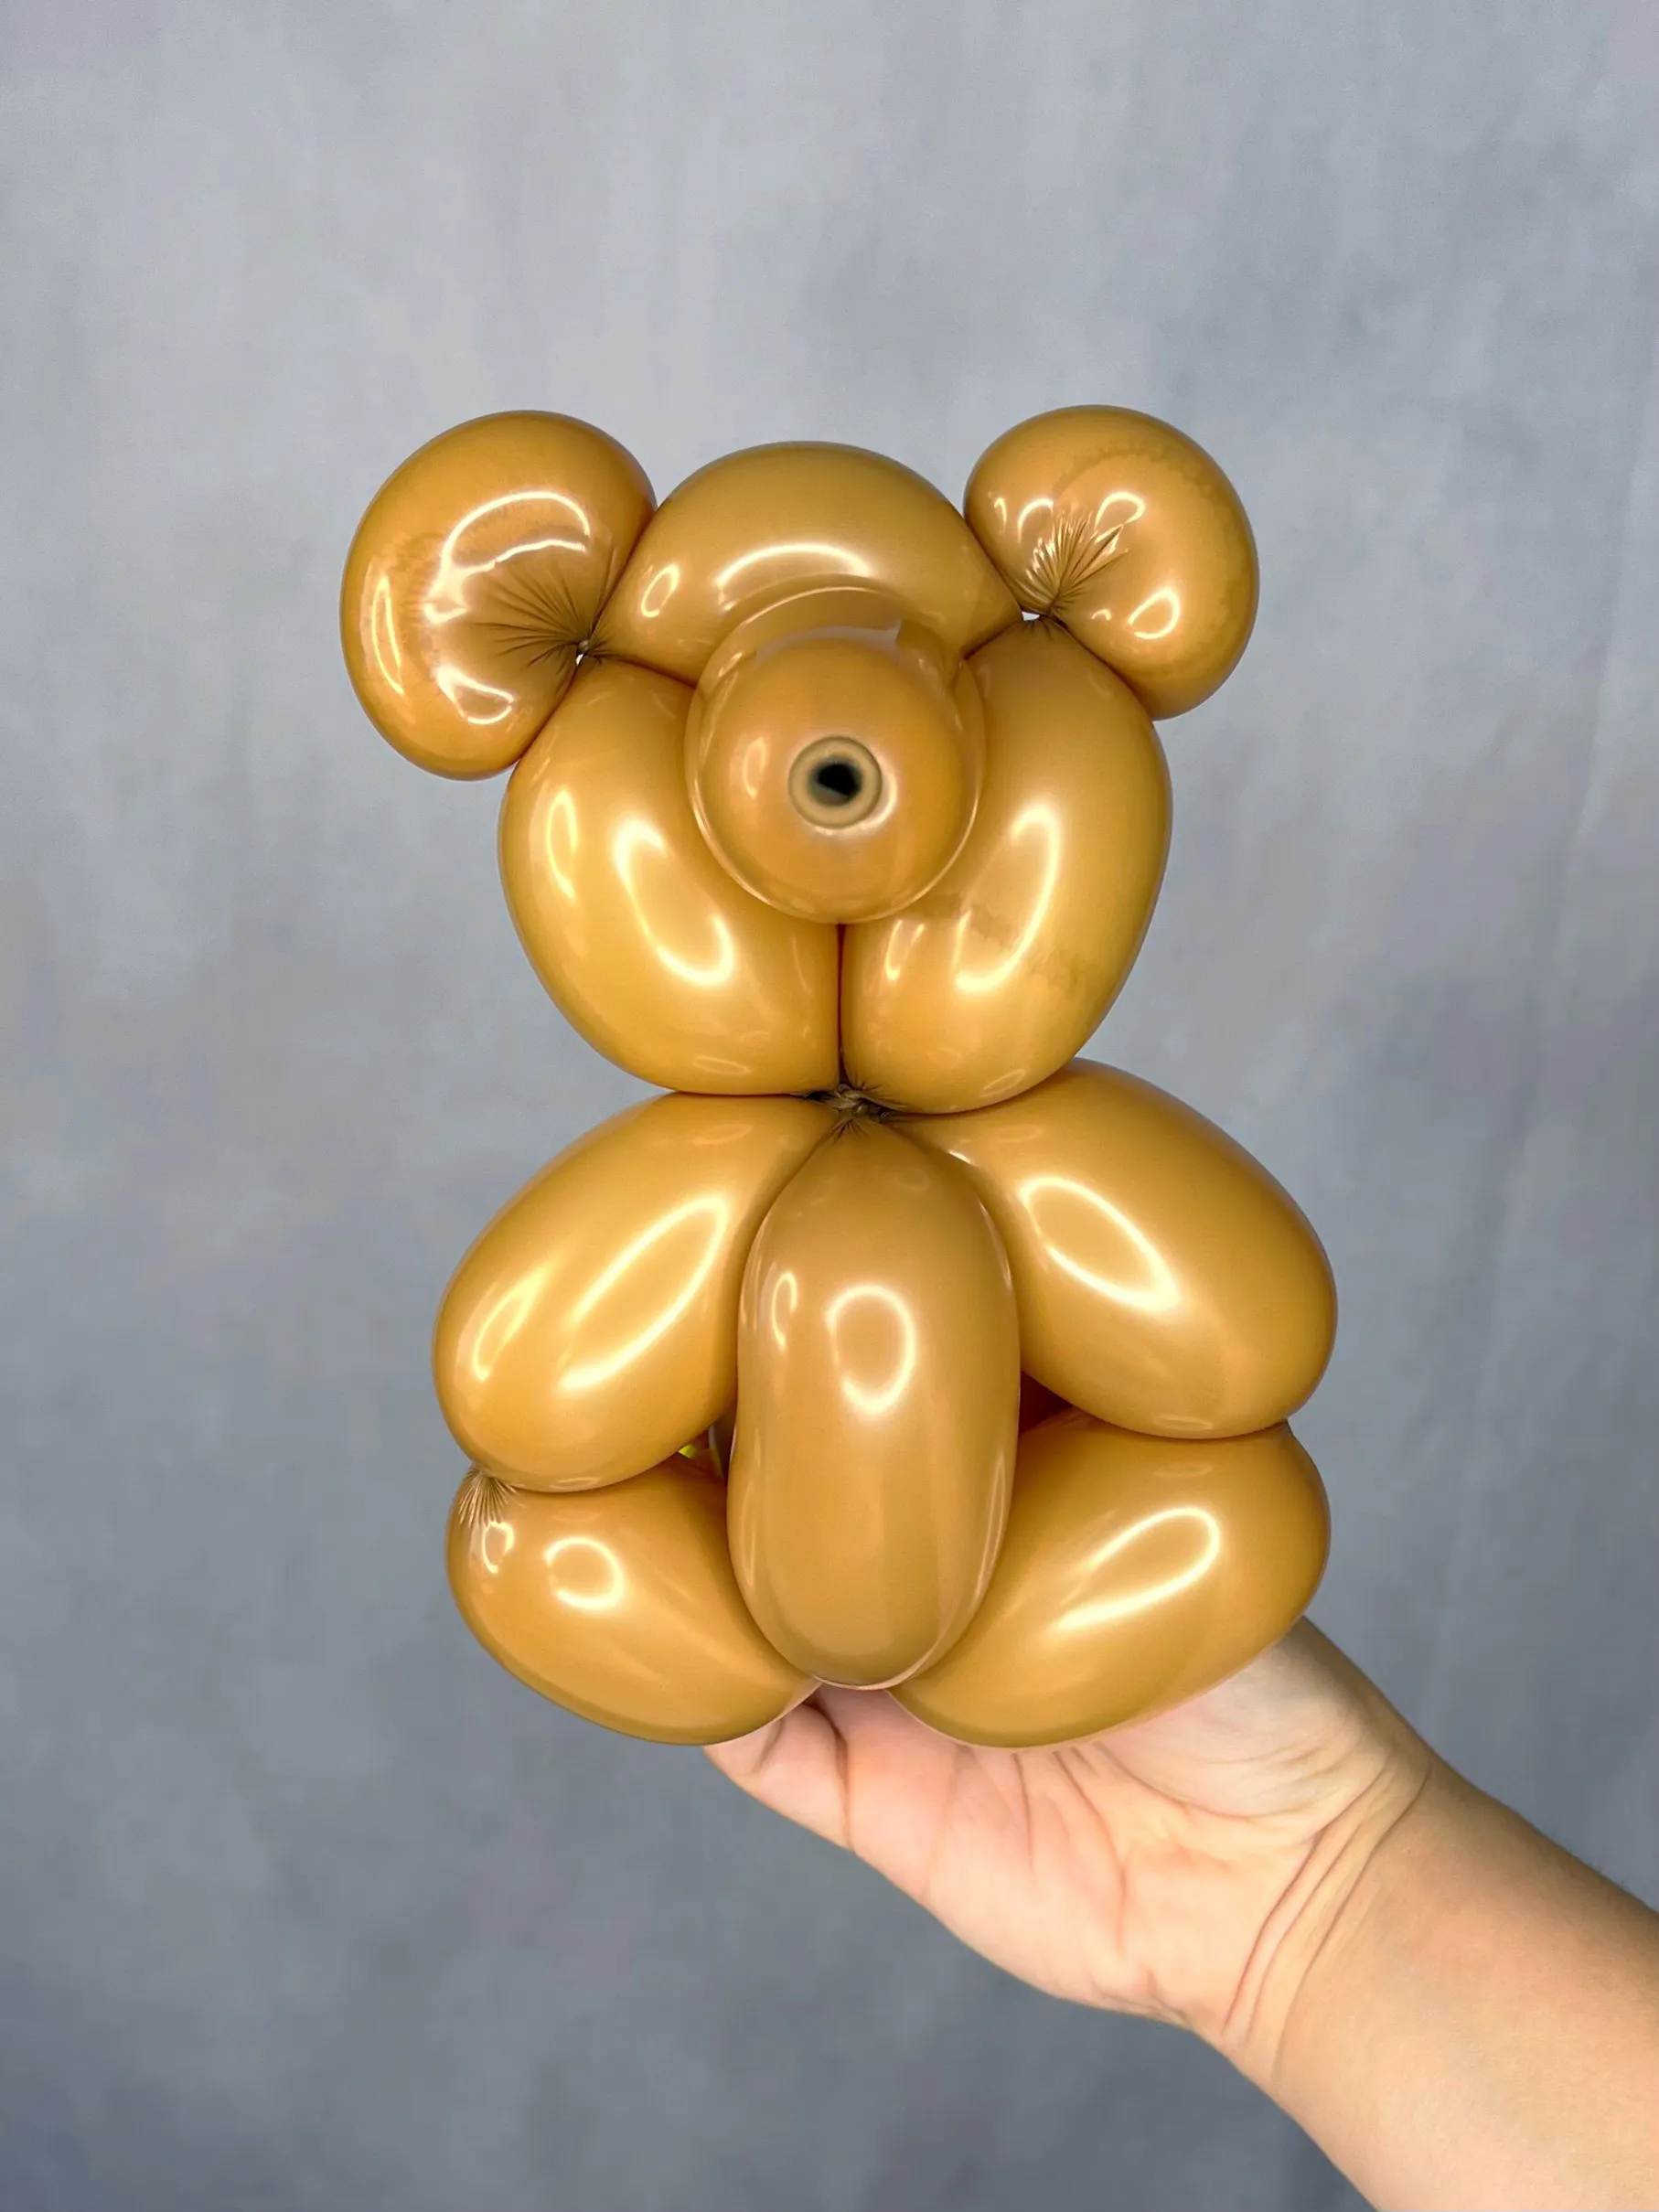 Balloon sculpture of a teddy bear